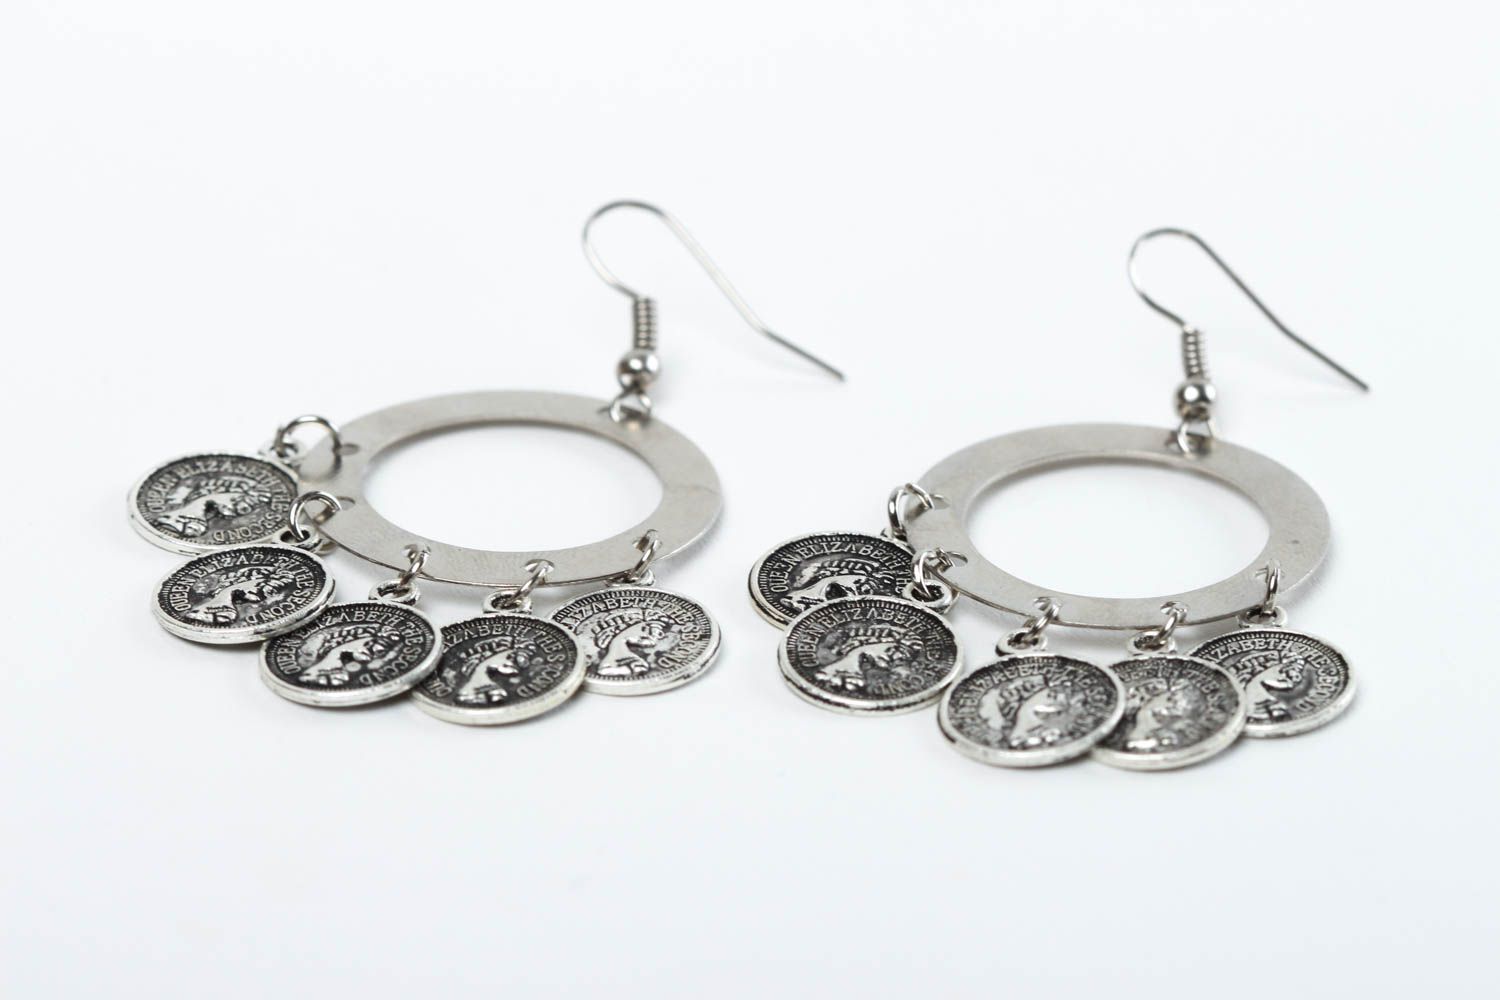 Handmade earrings designer jewelry unusual accessory gift ideas earrings for her photo 3